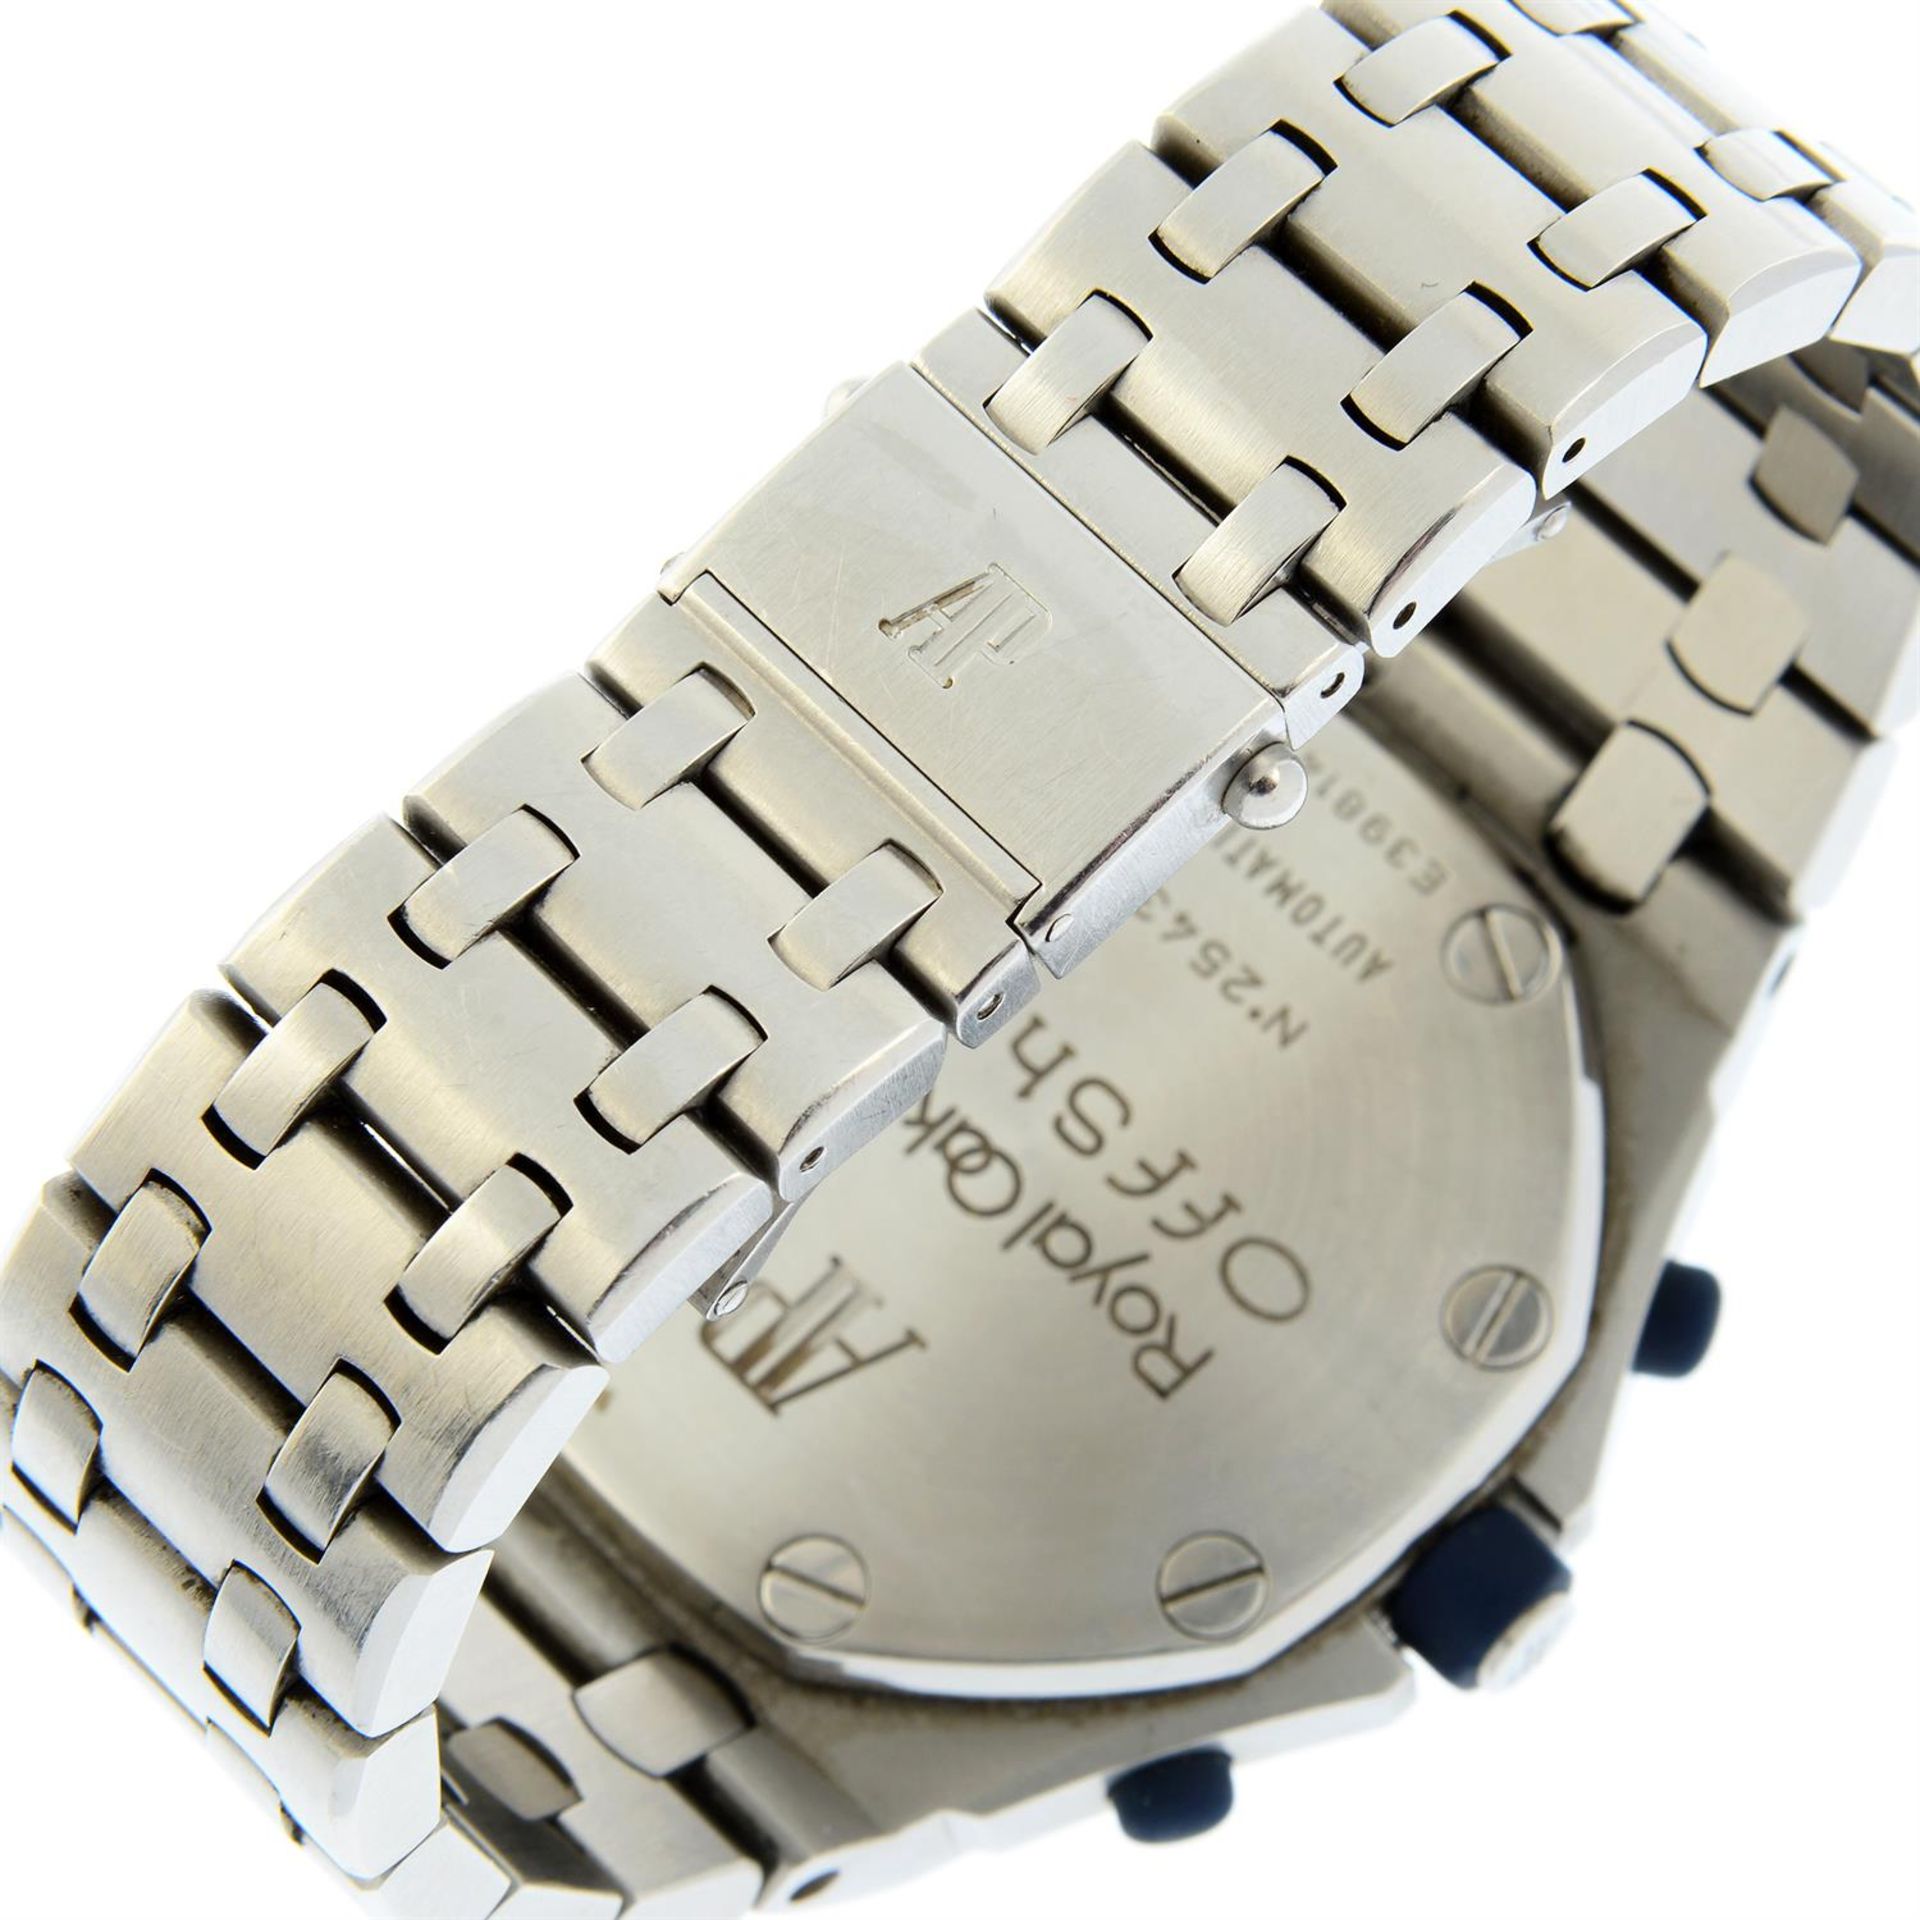 AUDEMARS PIGUET - a stainless steel Royal Oak Offshore chronograph bracelet watch, 42mm. - Image 2 of 6